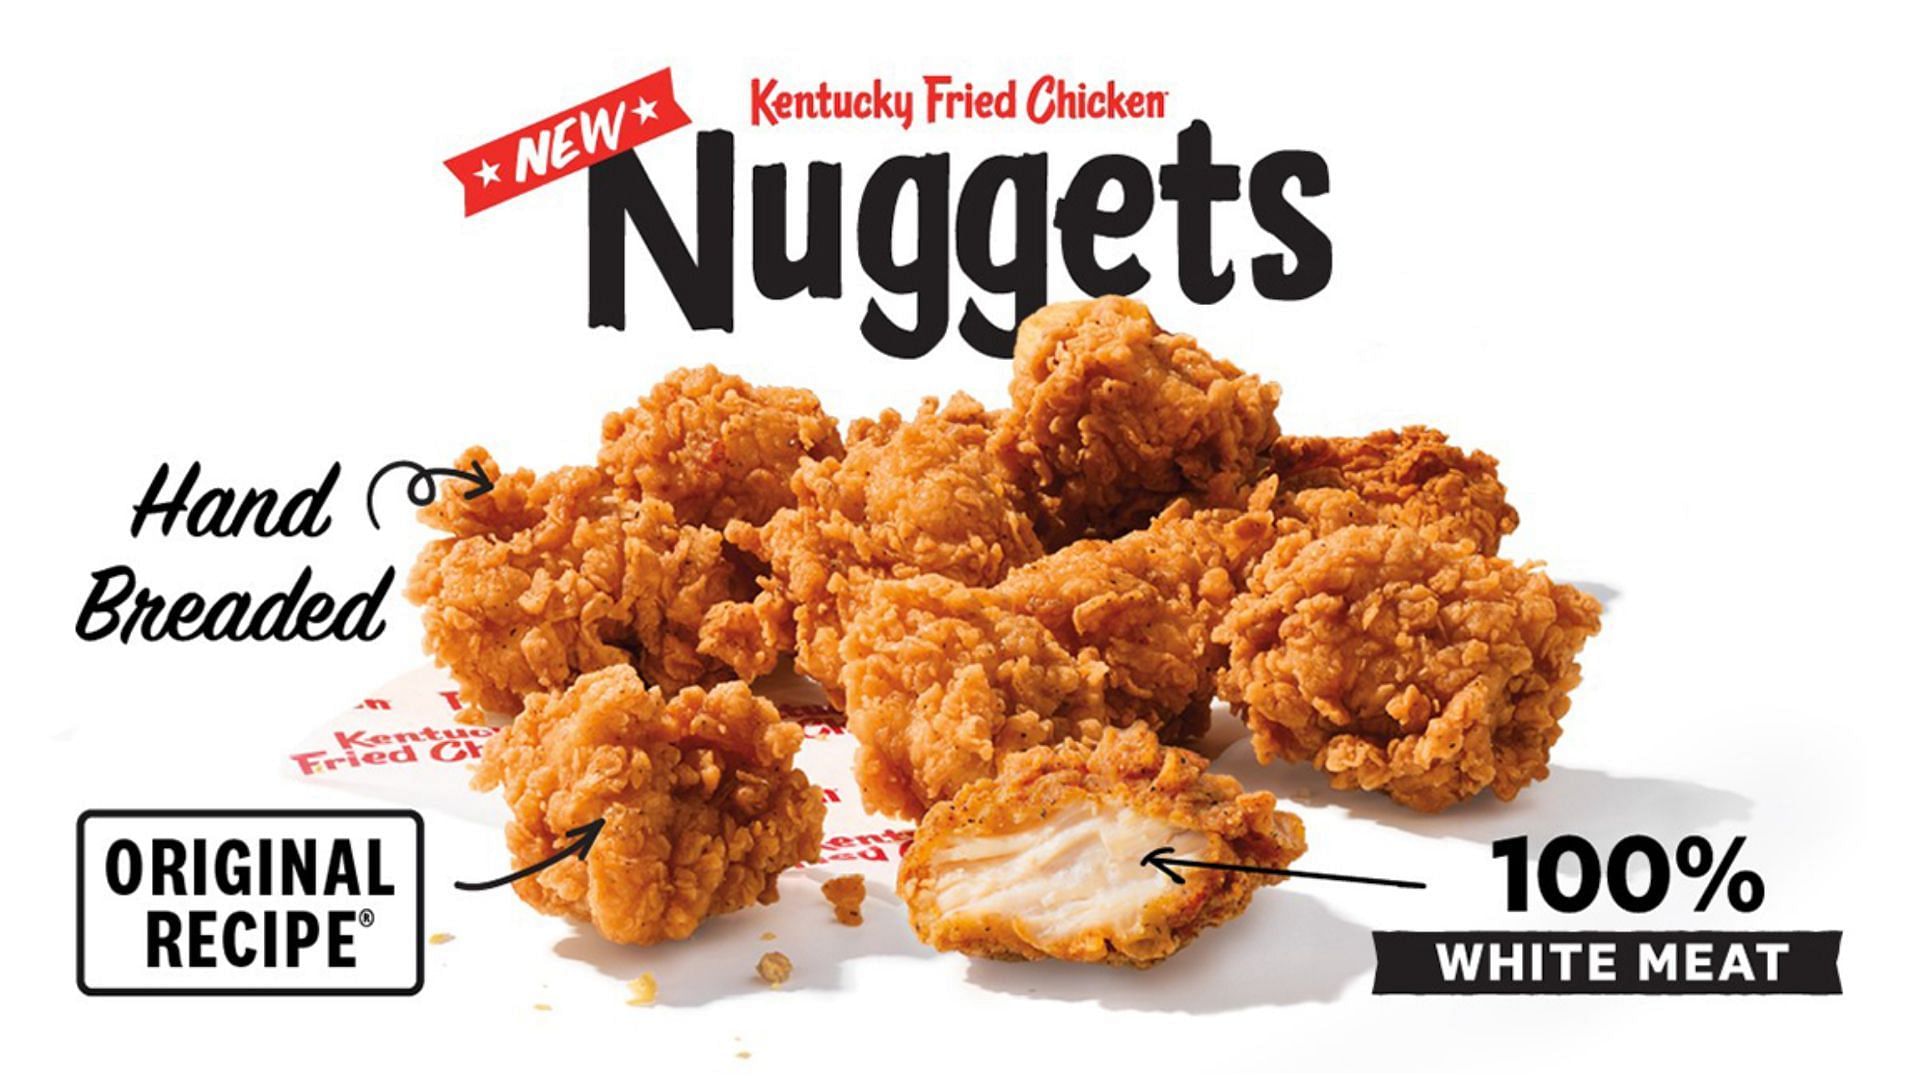 KFC introduces new Kentucky Fried Chicken Nuggets to its permanent U.S. menu (Image via KFC)